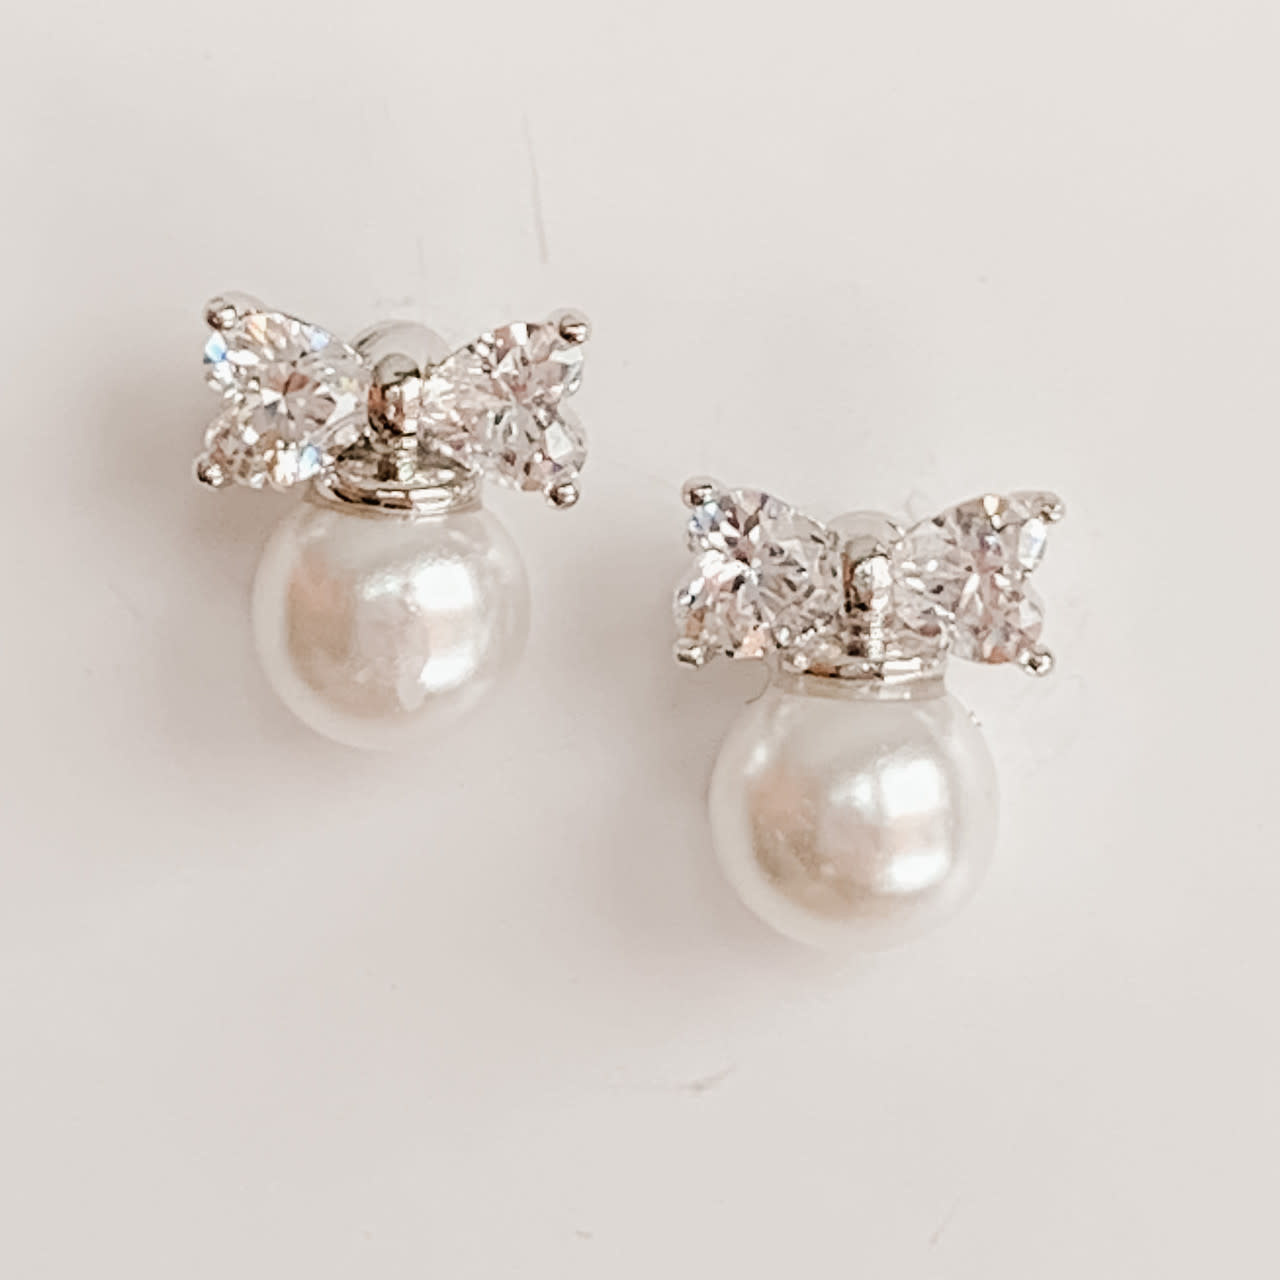 Lou & Co. Silver Pearl/CZ Bow Post Earrings